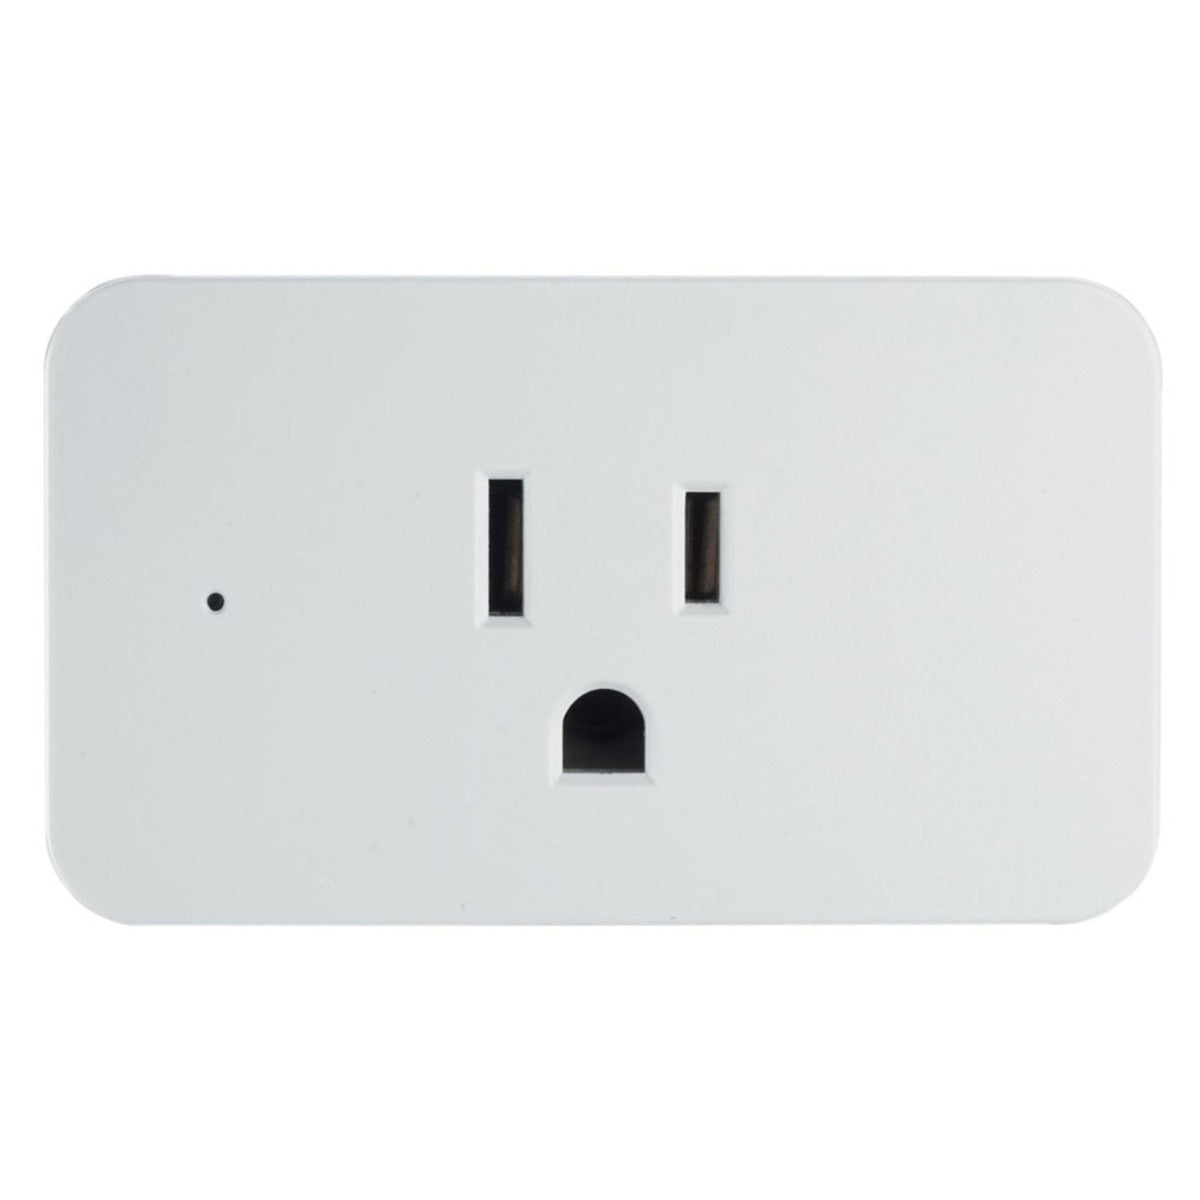 Starfish 15-Amp Wi-Fi Smart Plug Outlet White